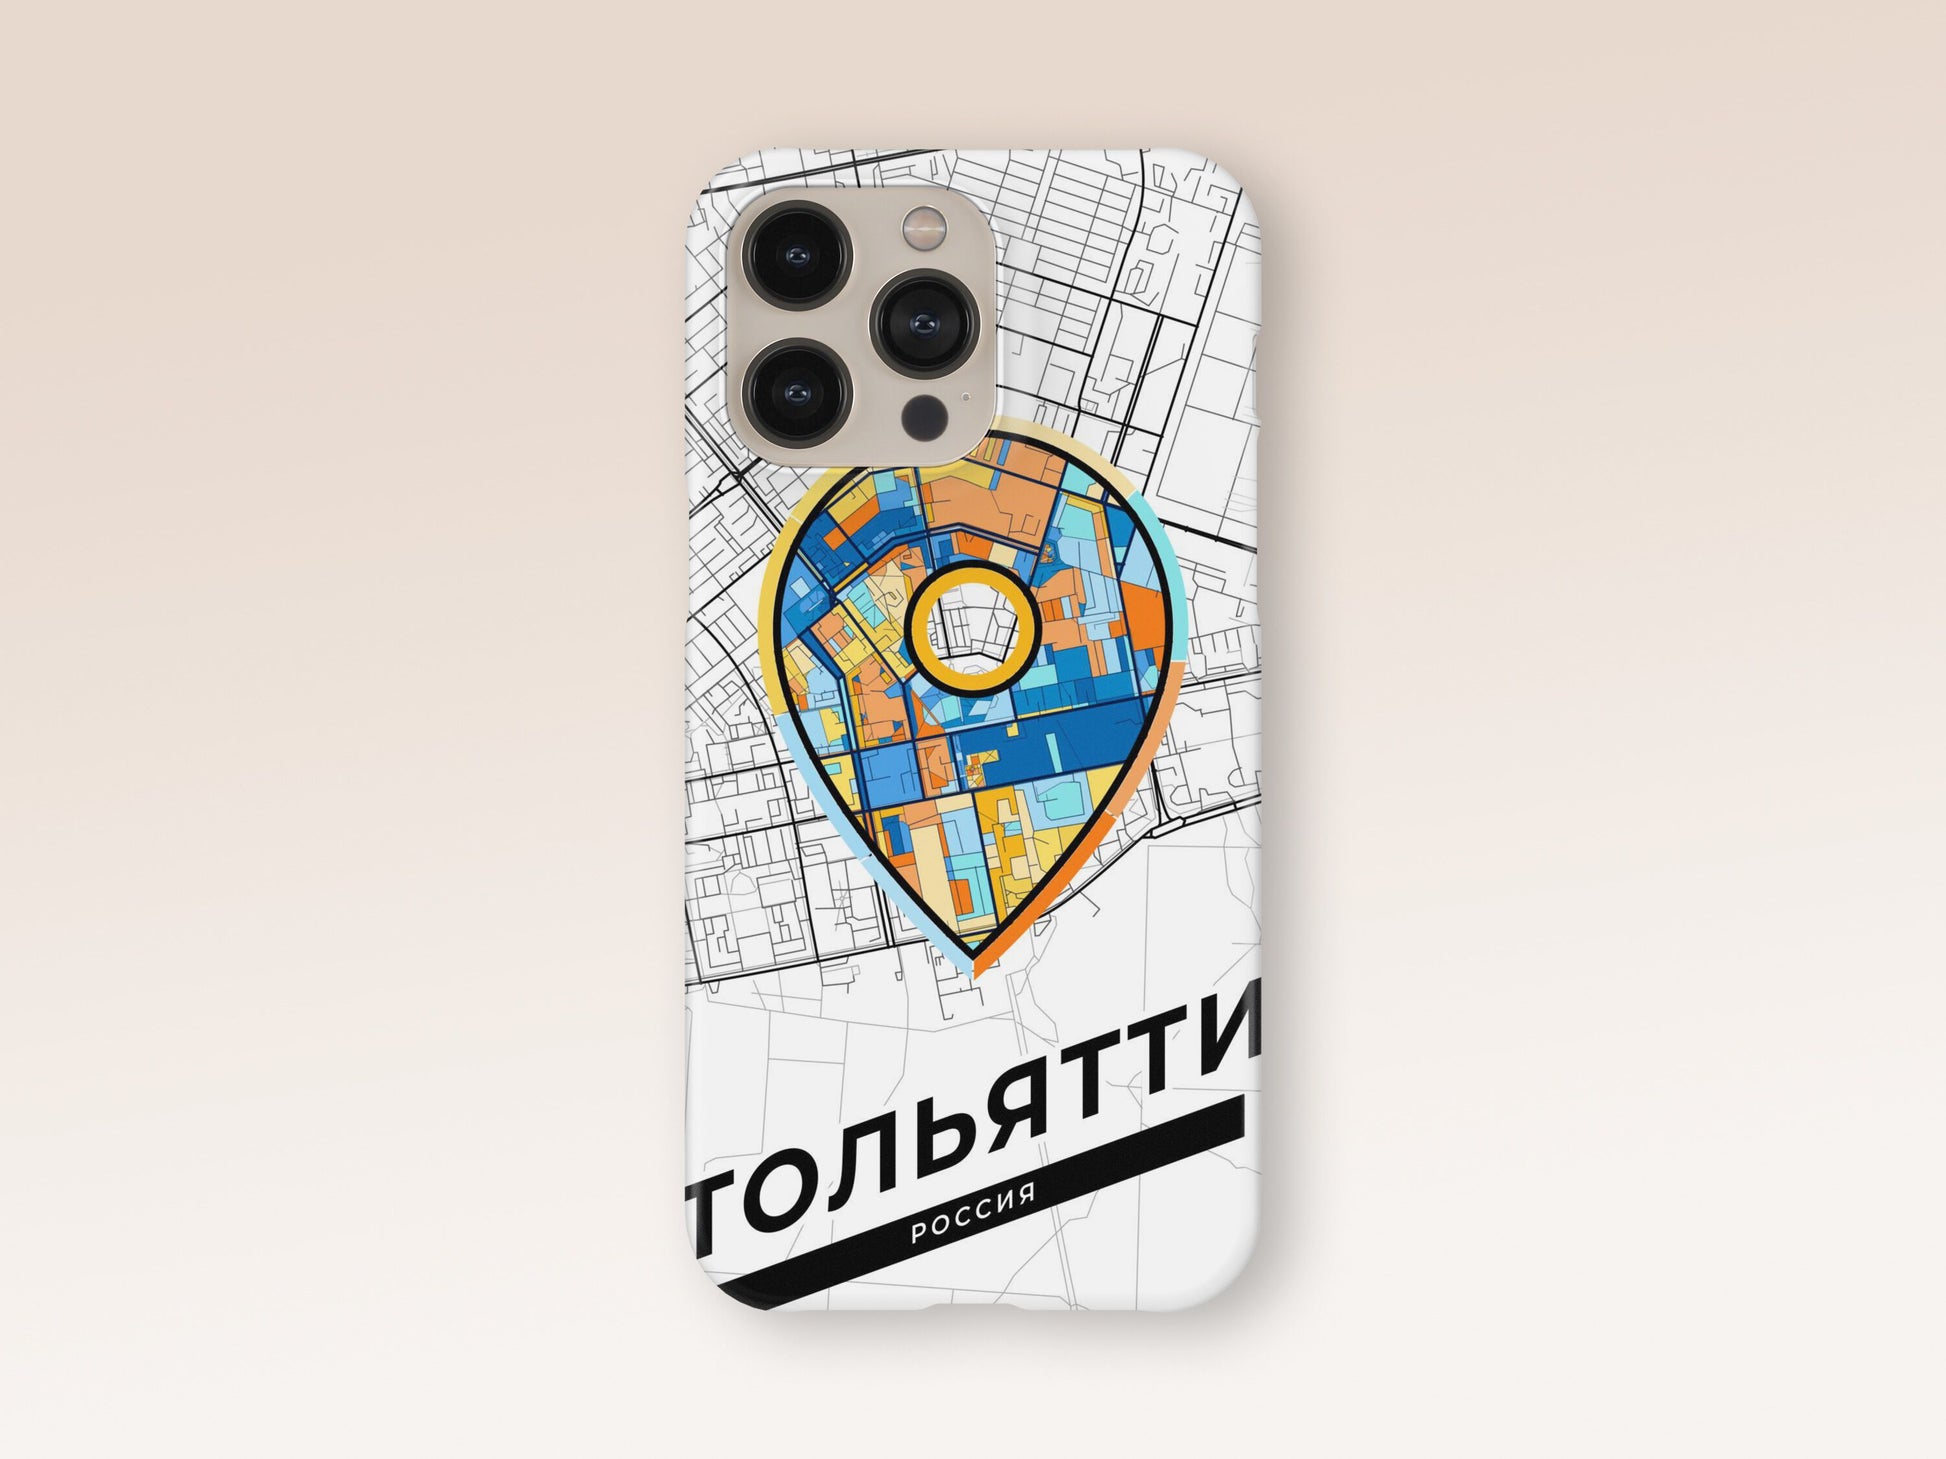 Tolyatti Russia slim phone case with colorful icon 1